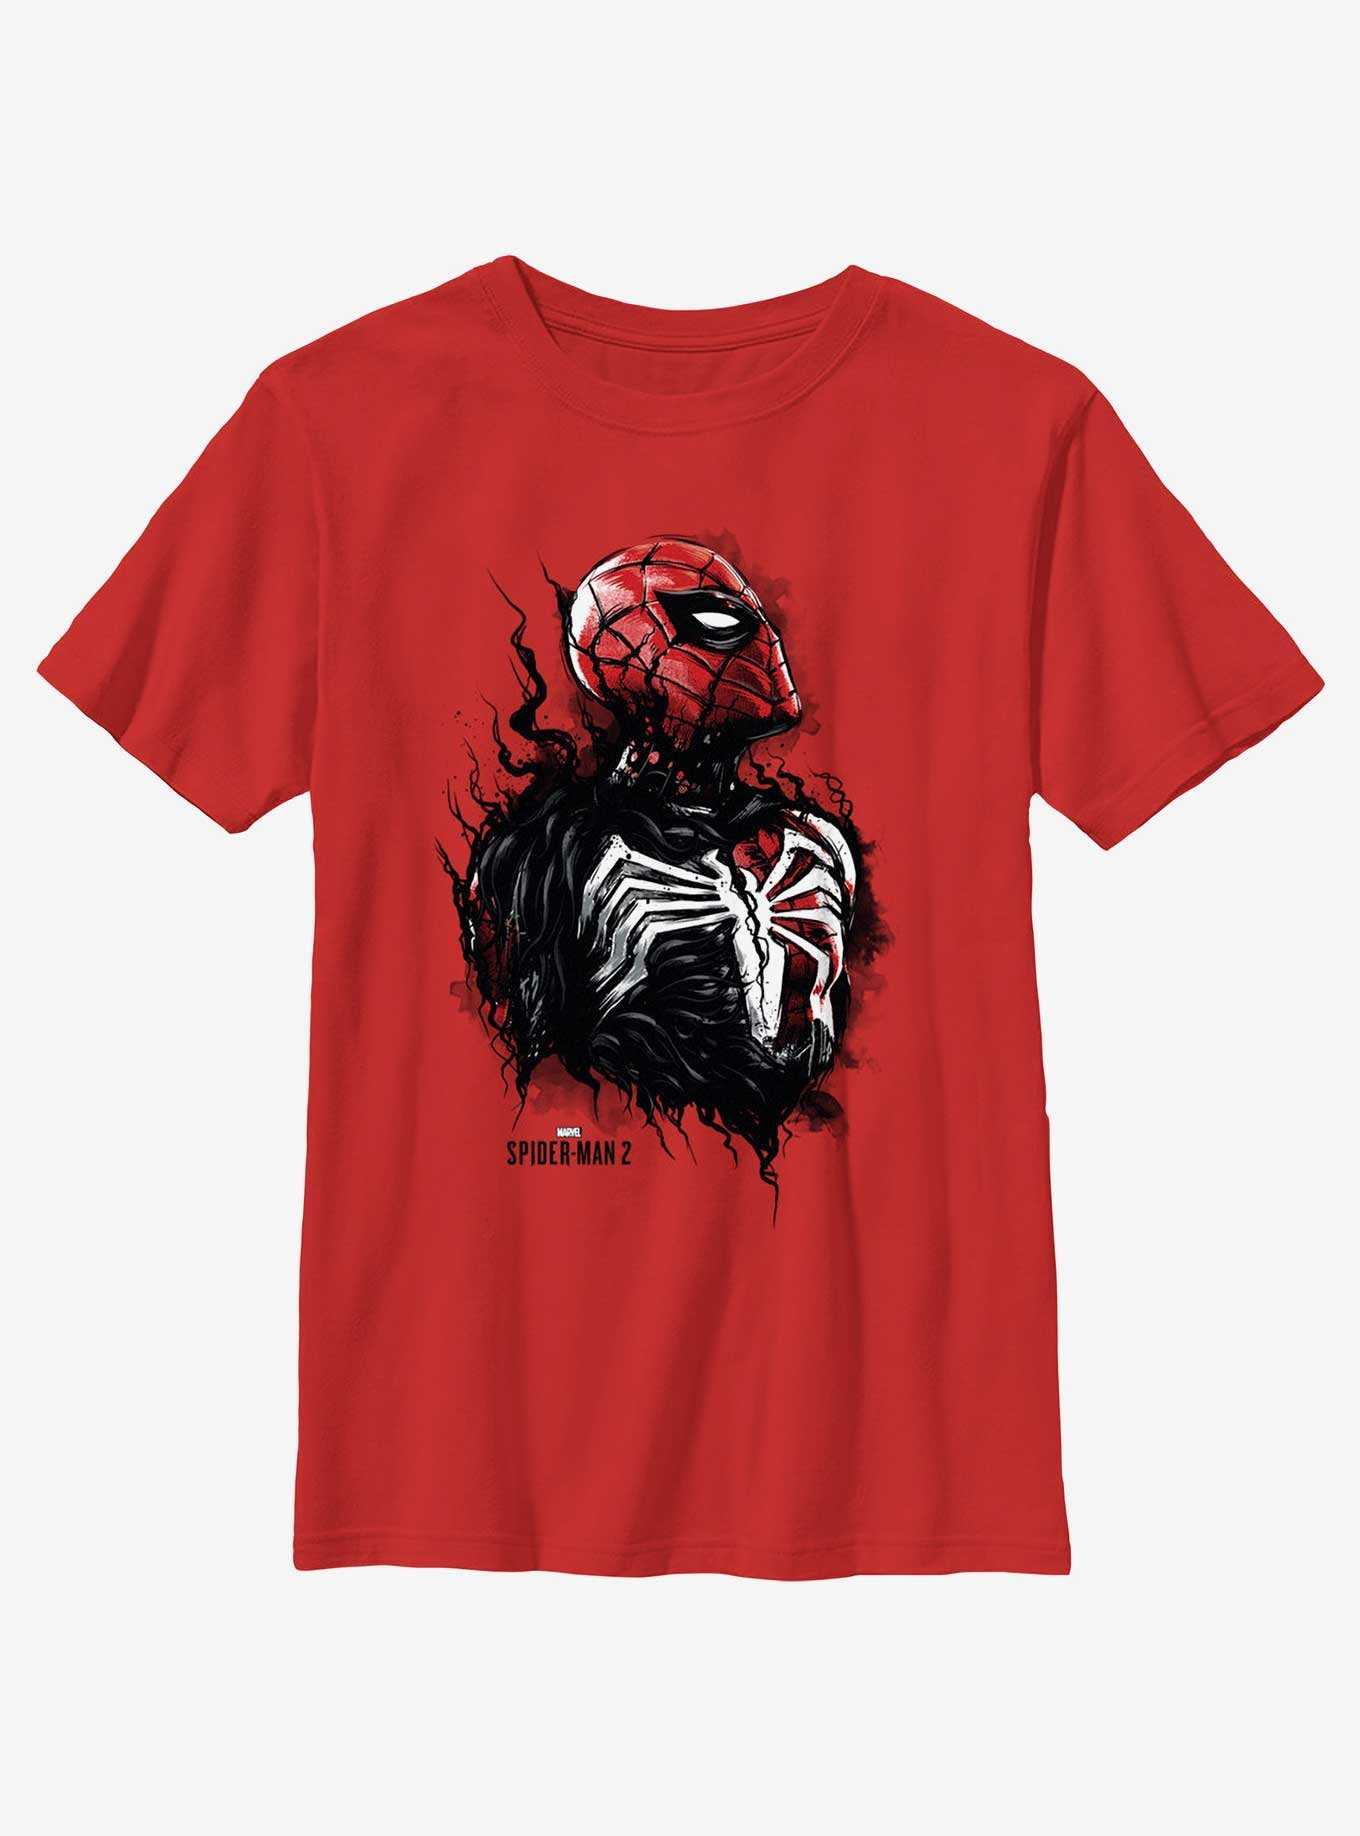 Marvel Spider-Man 2 Game Spider-Man Venom Transformation Youth T-Shirt, , hi-res